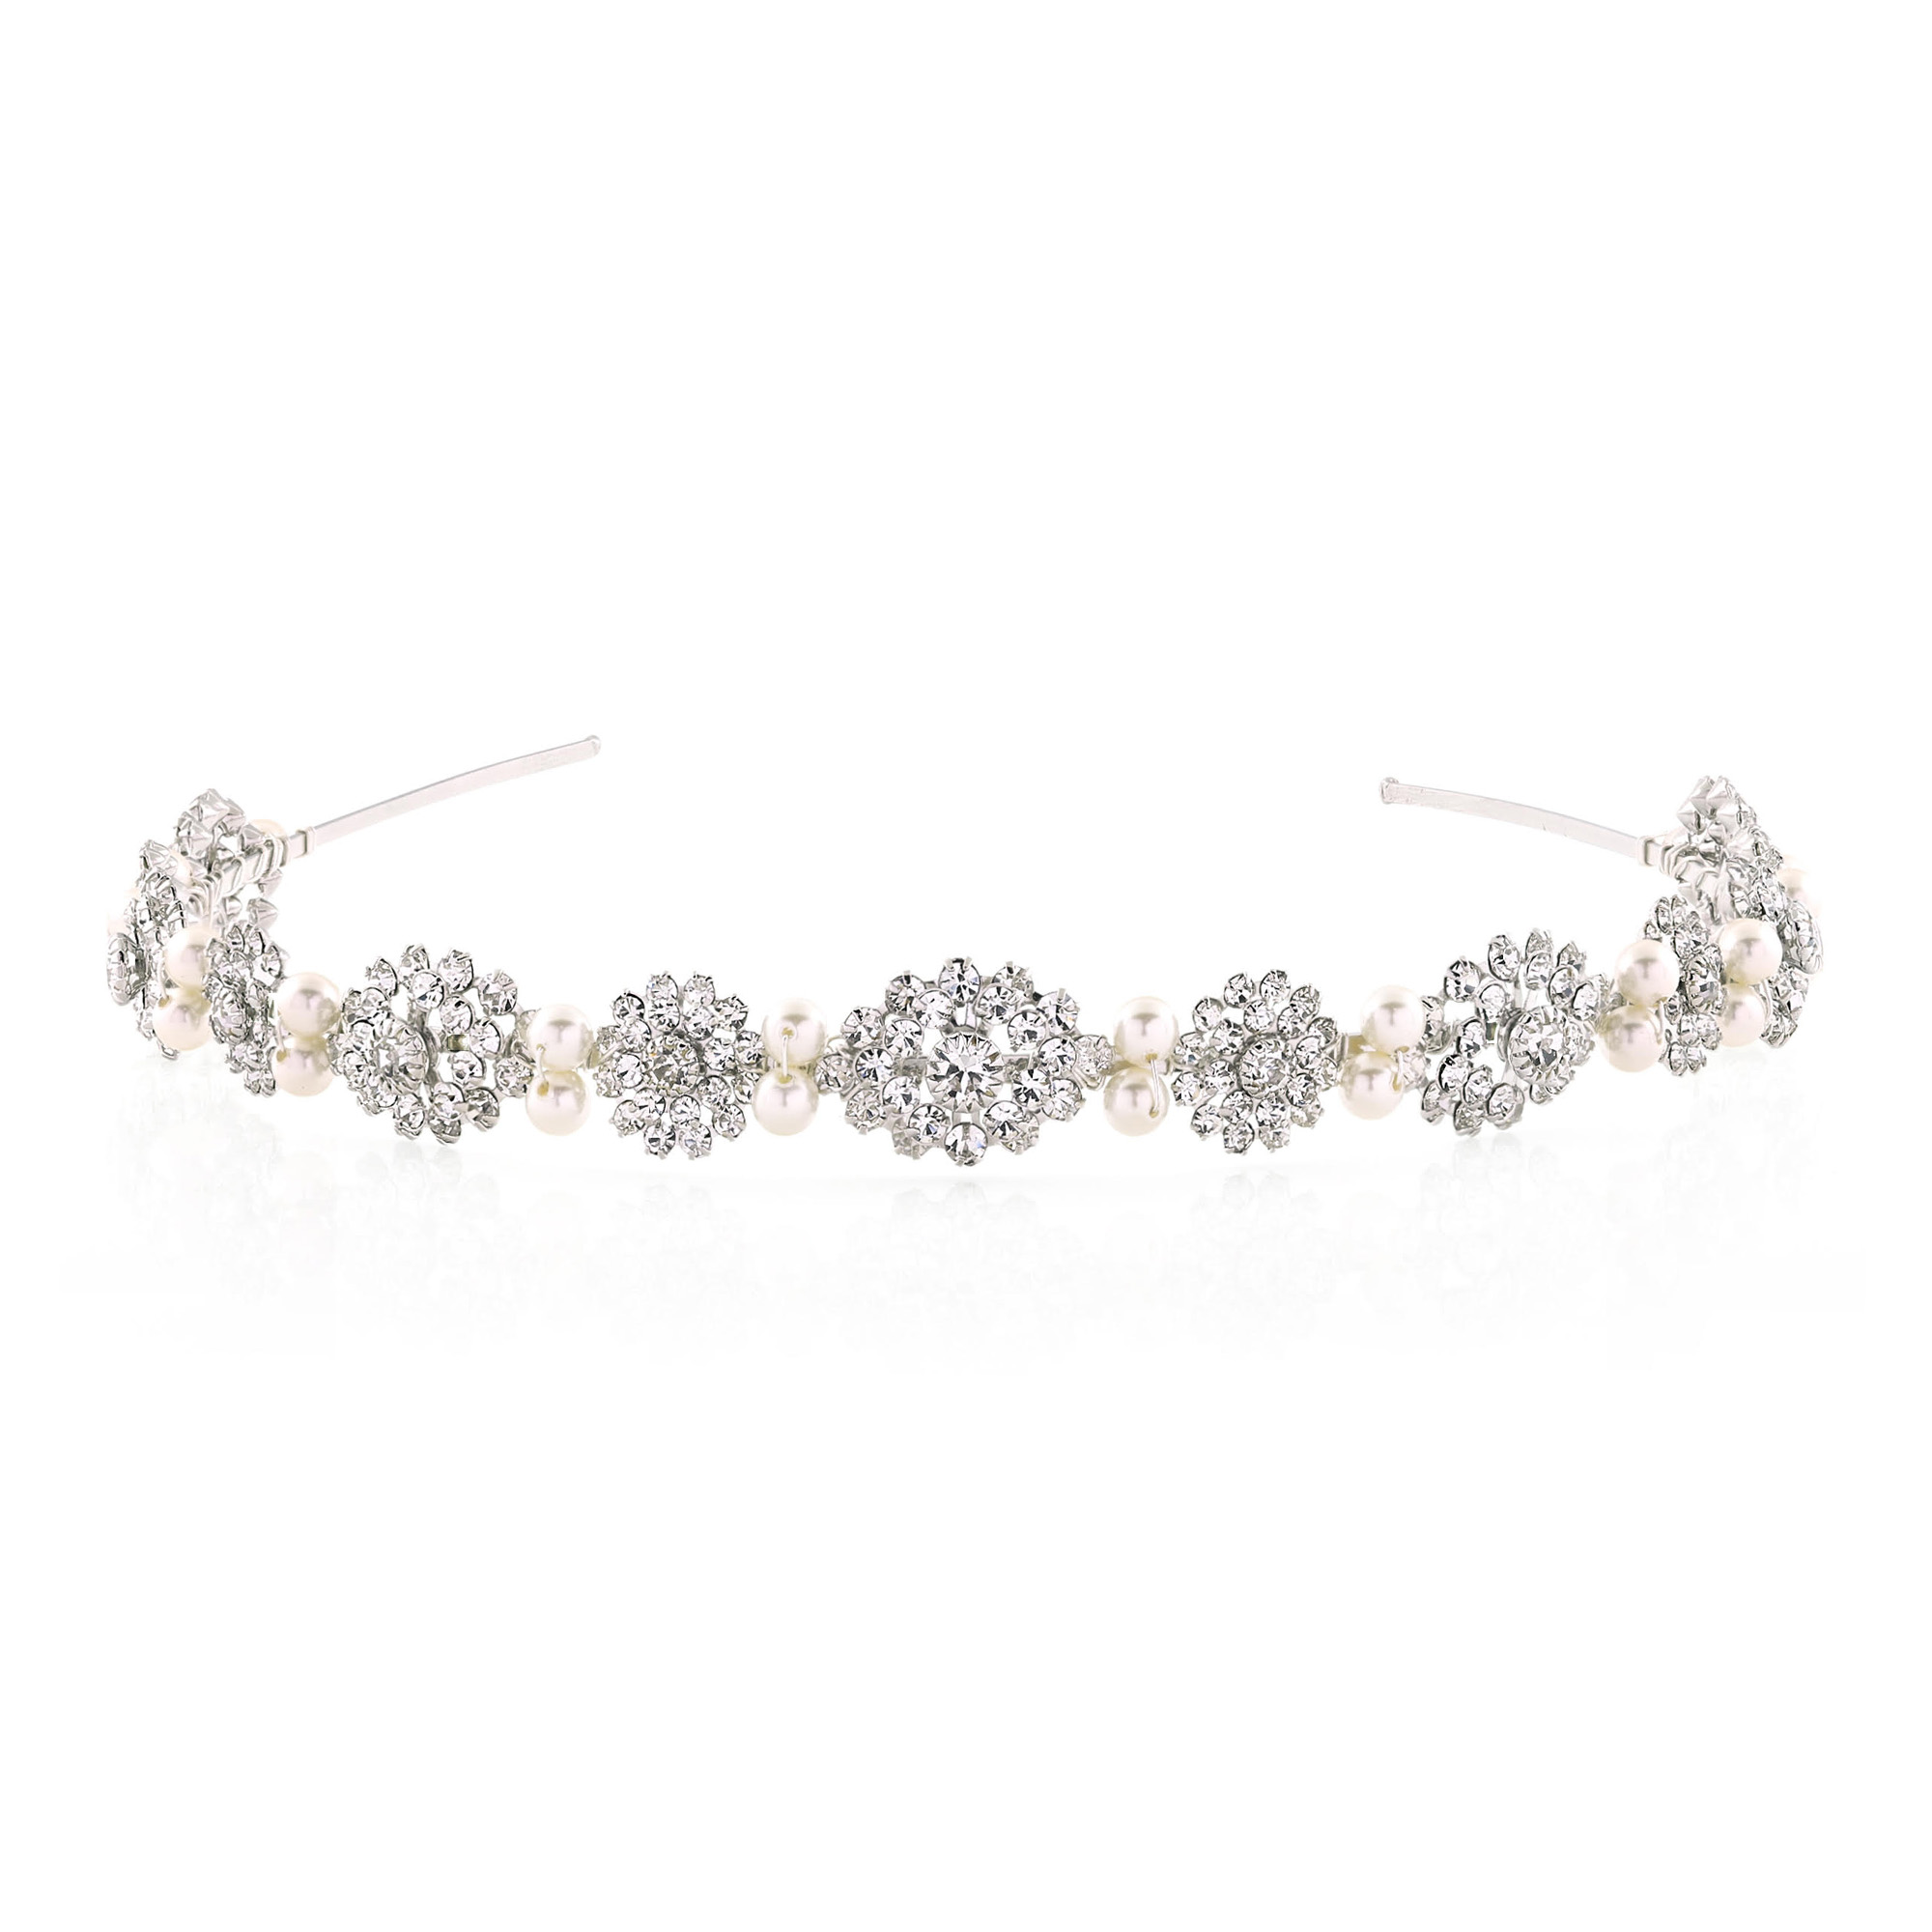 Kim Headband - Silver - Ellen Hunter NYC - Luxury Bridal Jewelry